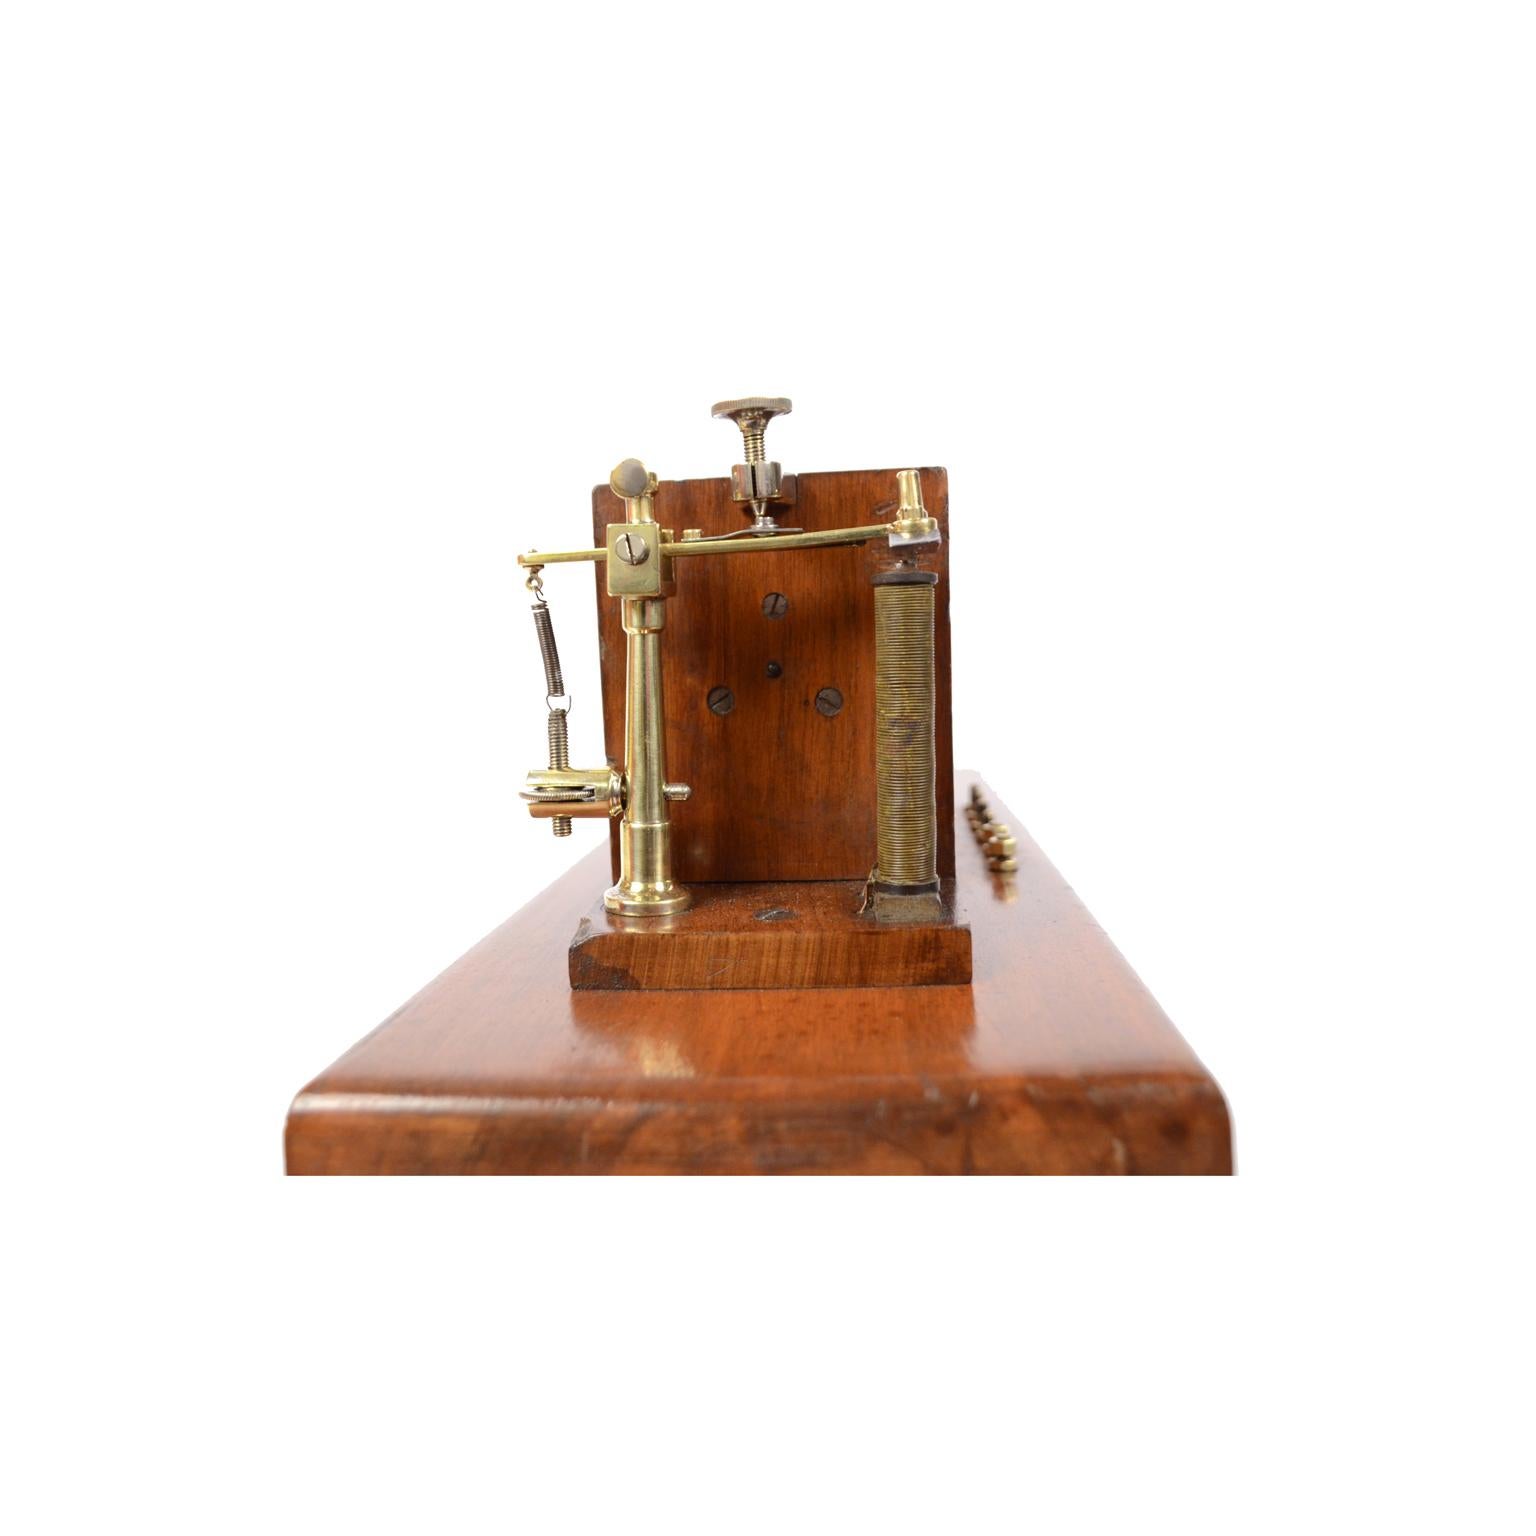 Induction Coil or Sled Antique Scientific Instrument by Du Bois Reymond 1870  For Sale 7